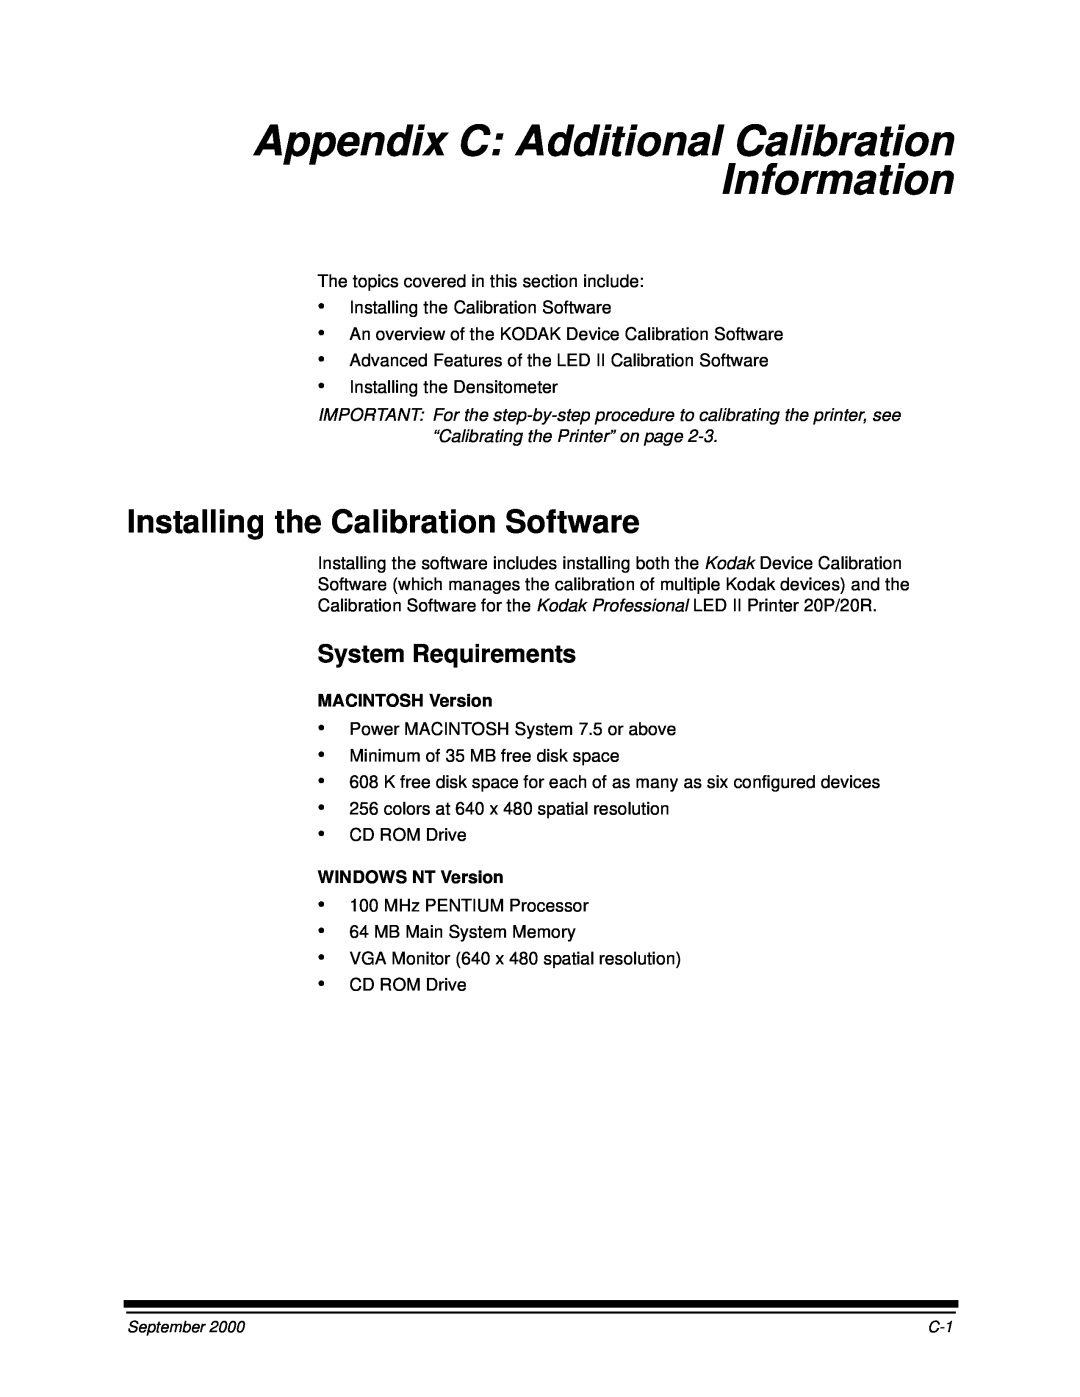 Kodak 20P manual Appendix C: Additional Calibration Information, Installing the Calibration Software, System Requirements 